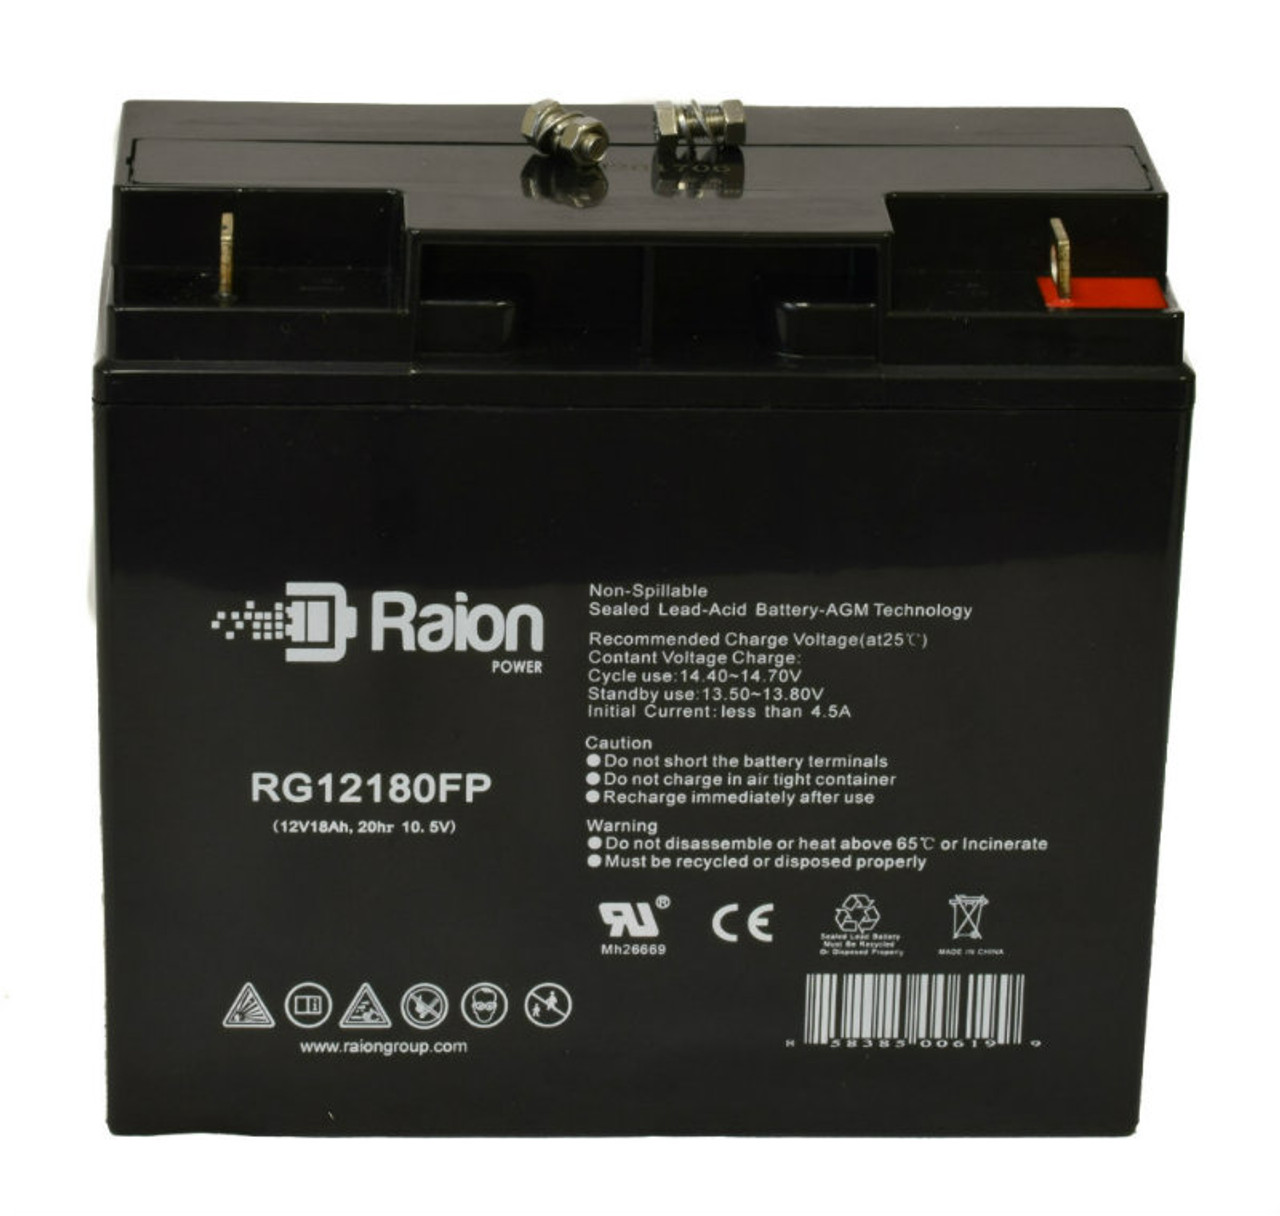 Raion Power RG12180FP 12V 18Ah Lead Acid Battery for National Battery C50D